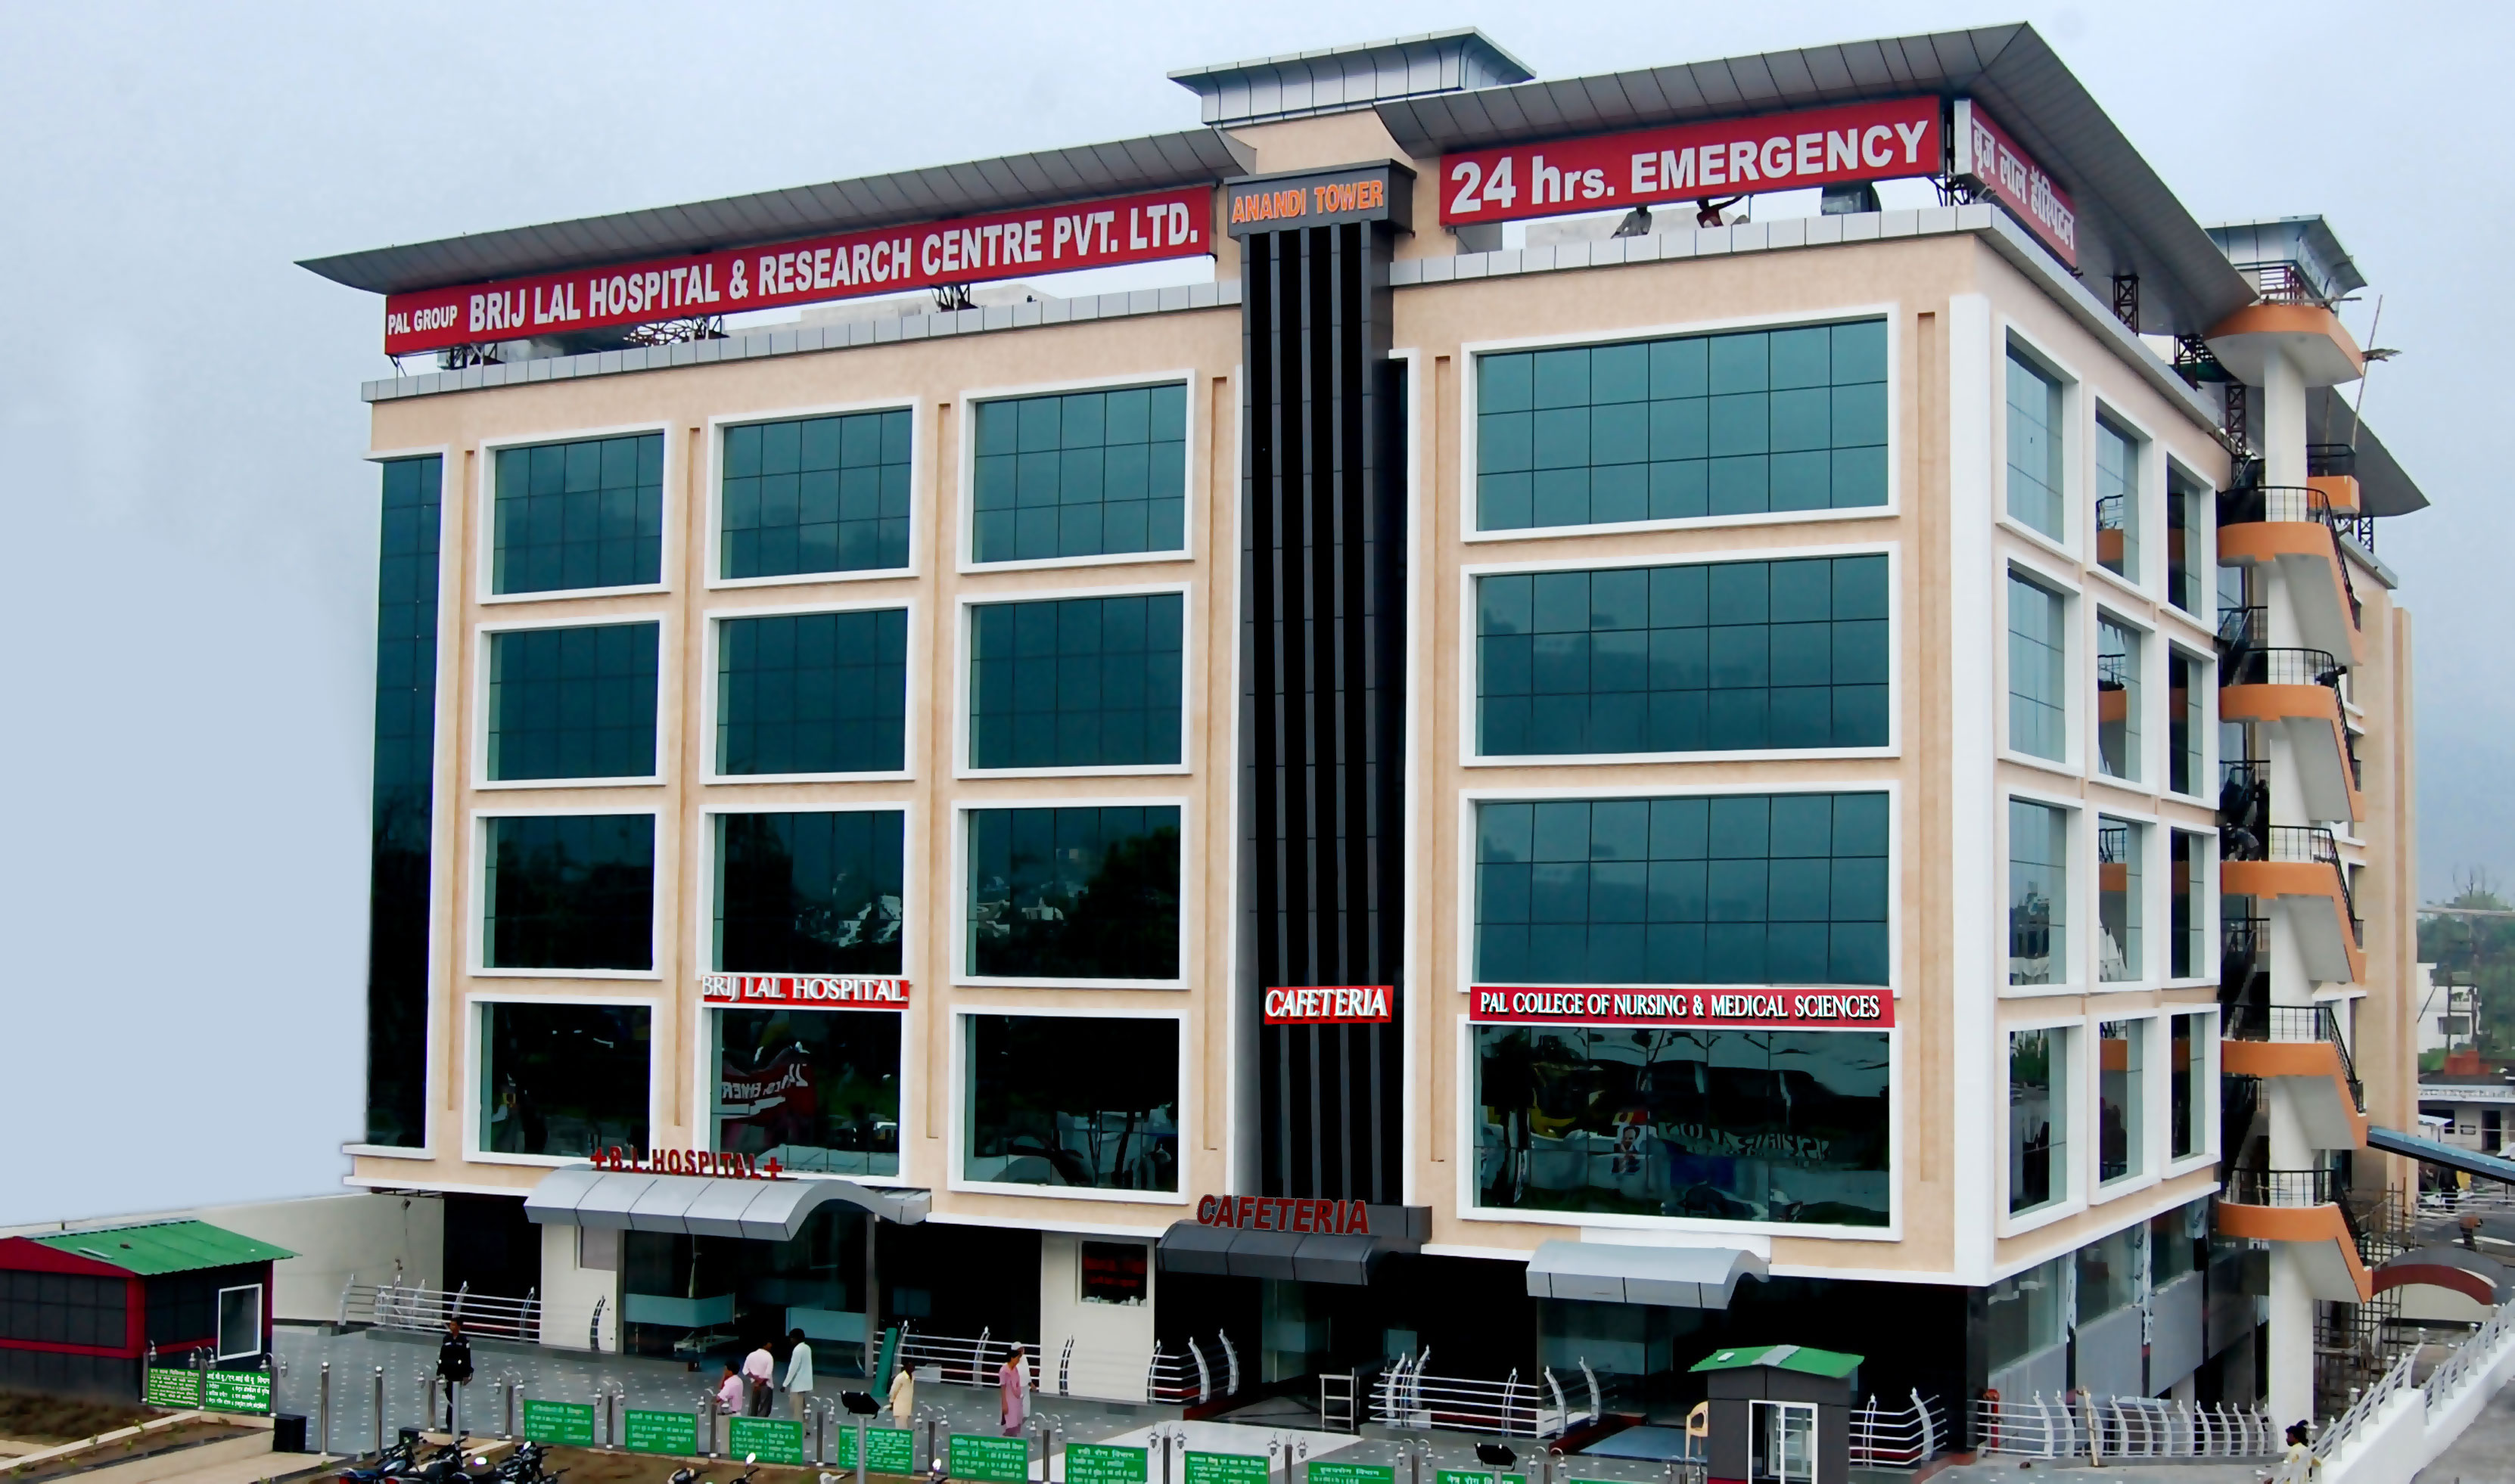 Brij Lal Hospital & Research Centre Pvt Ltd